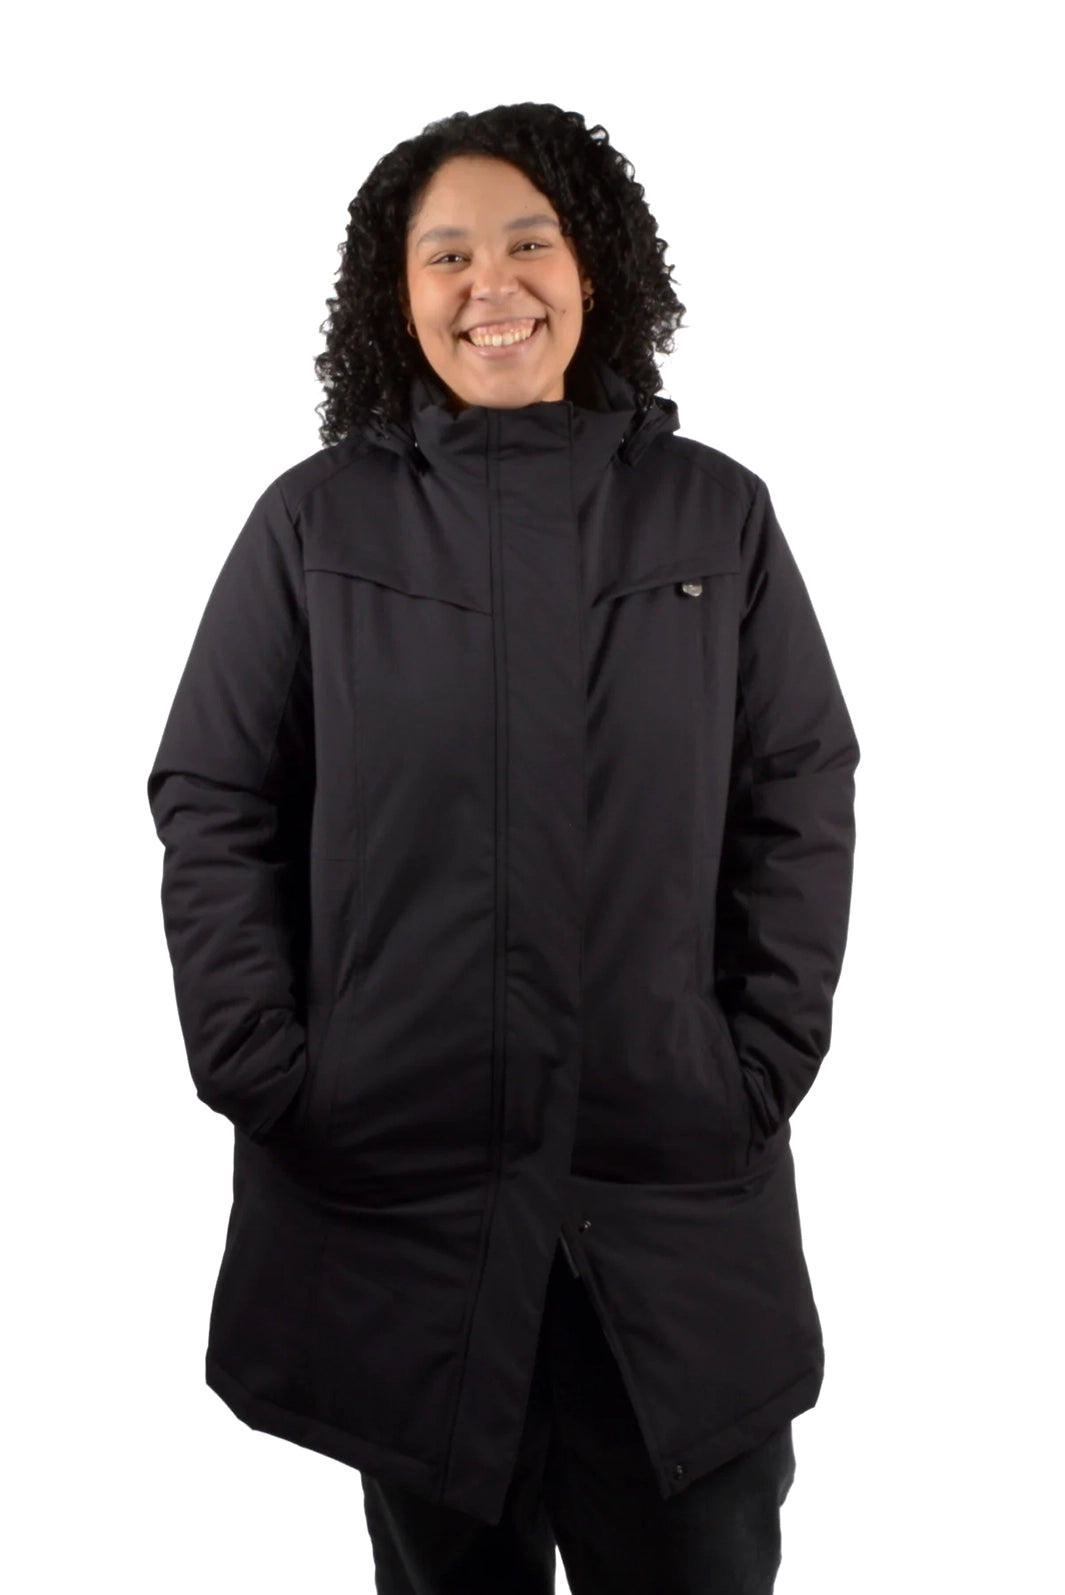 Plus Size Yellowknife Winter Jacket by Sportive Plus